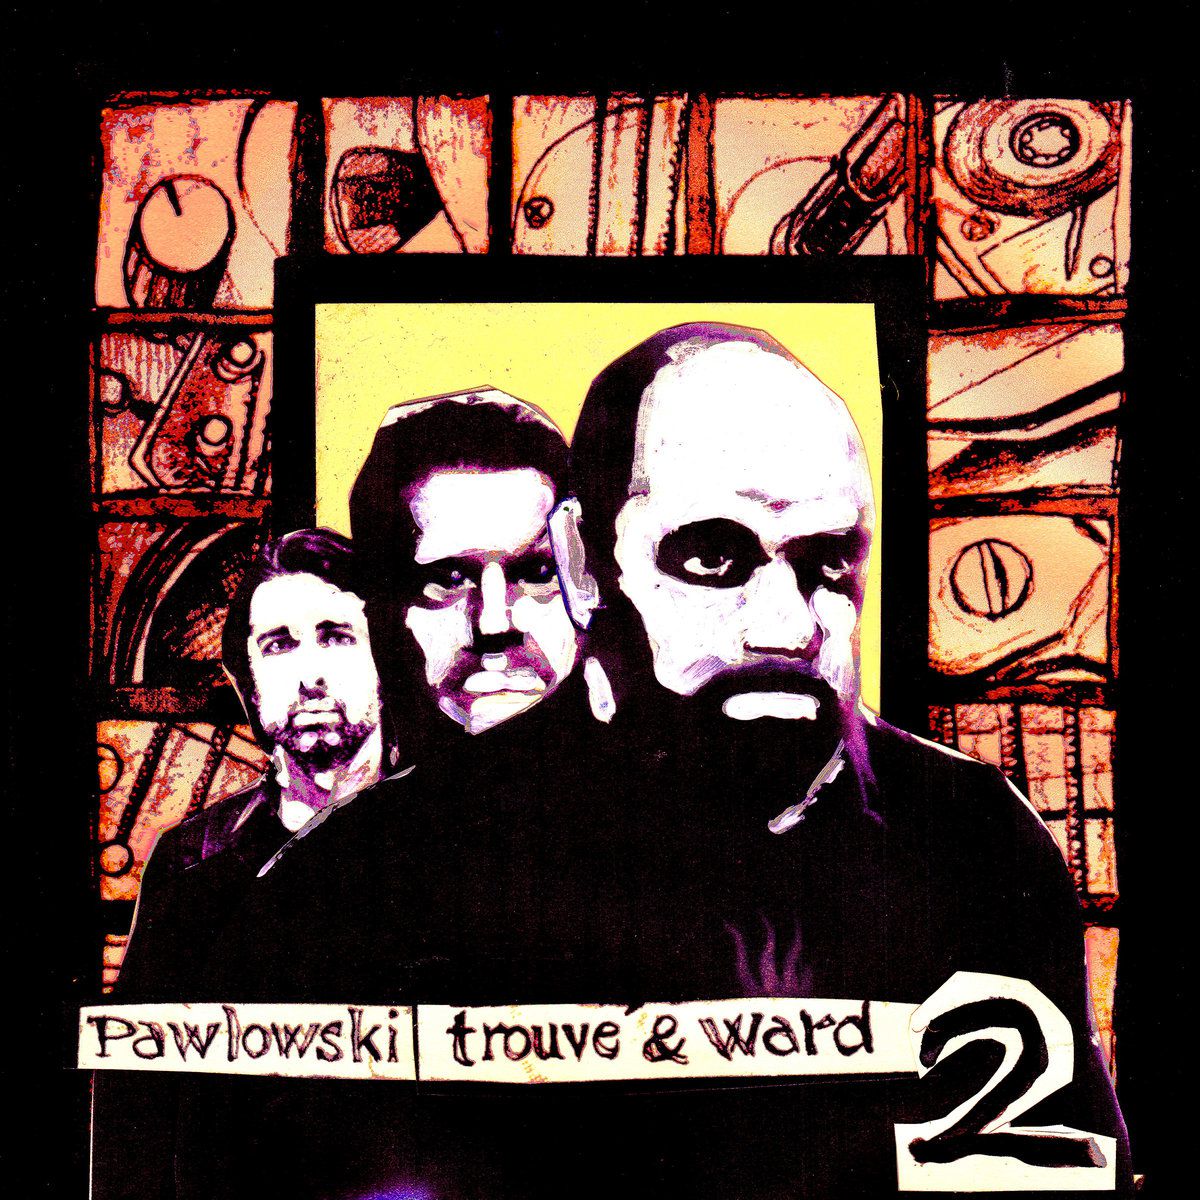 Pawlowski, Trouve & Ward - Volume 2